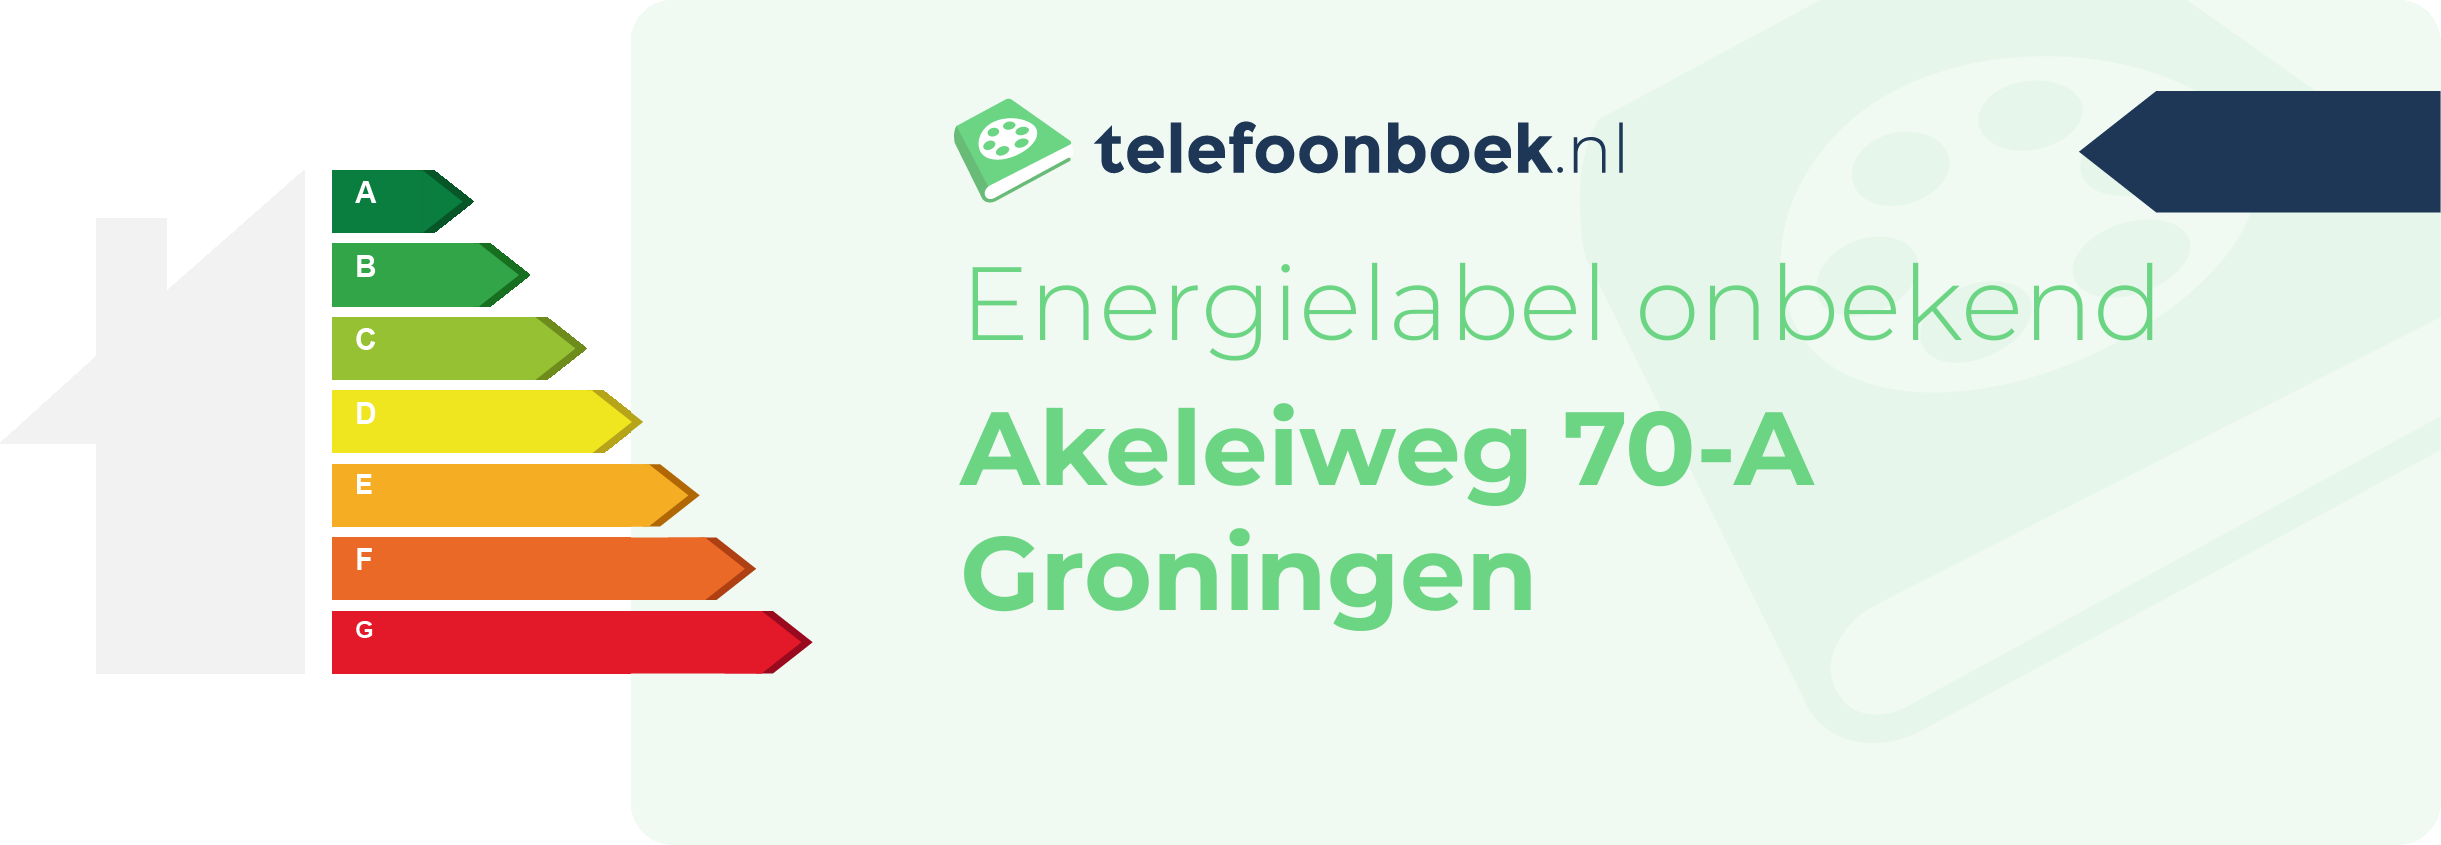 Energielabel Akeleiweg 70-A Groningen